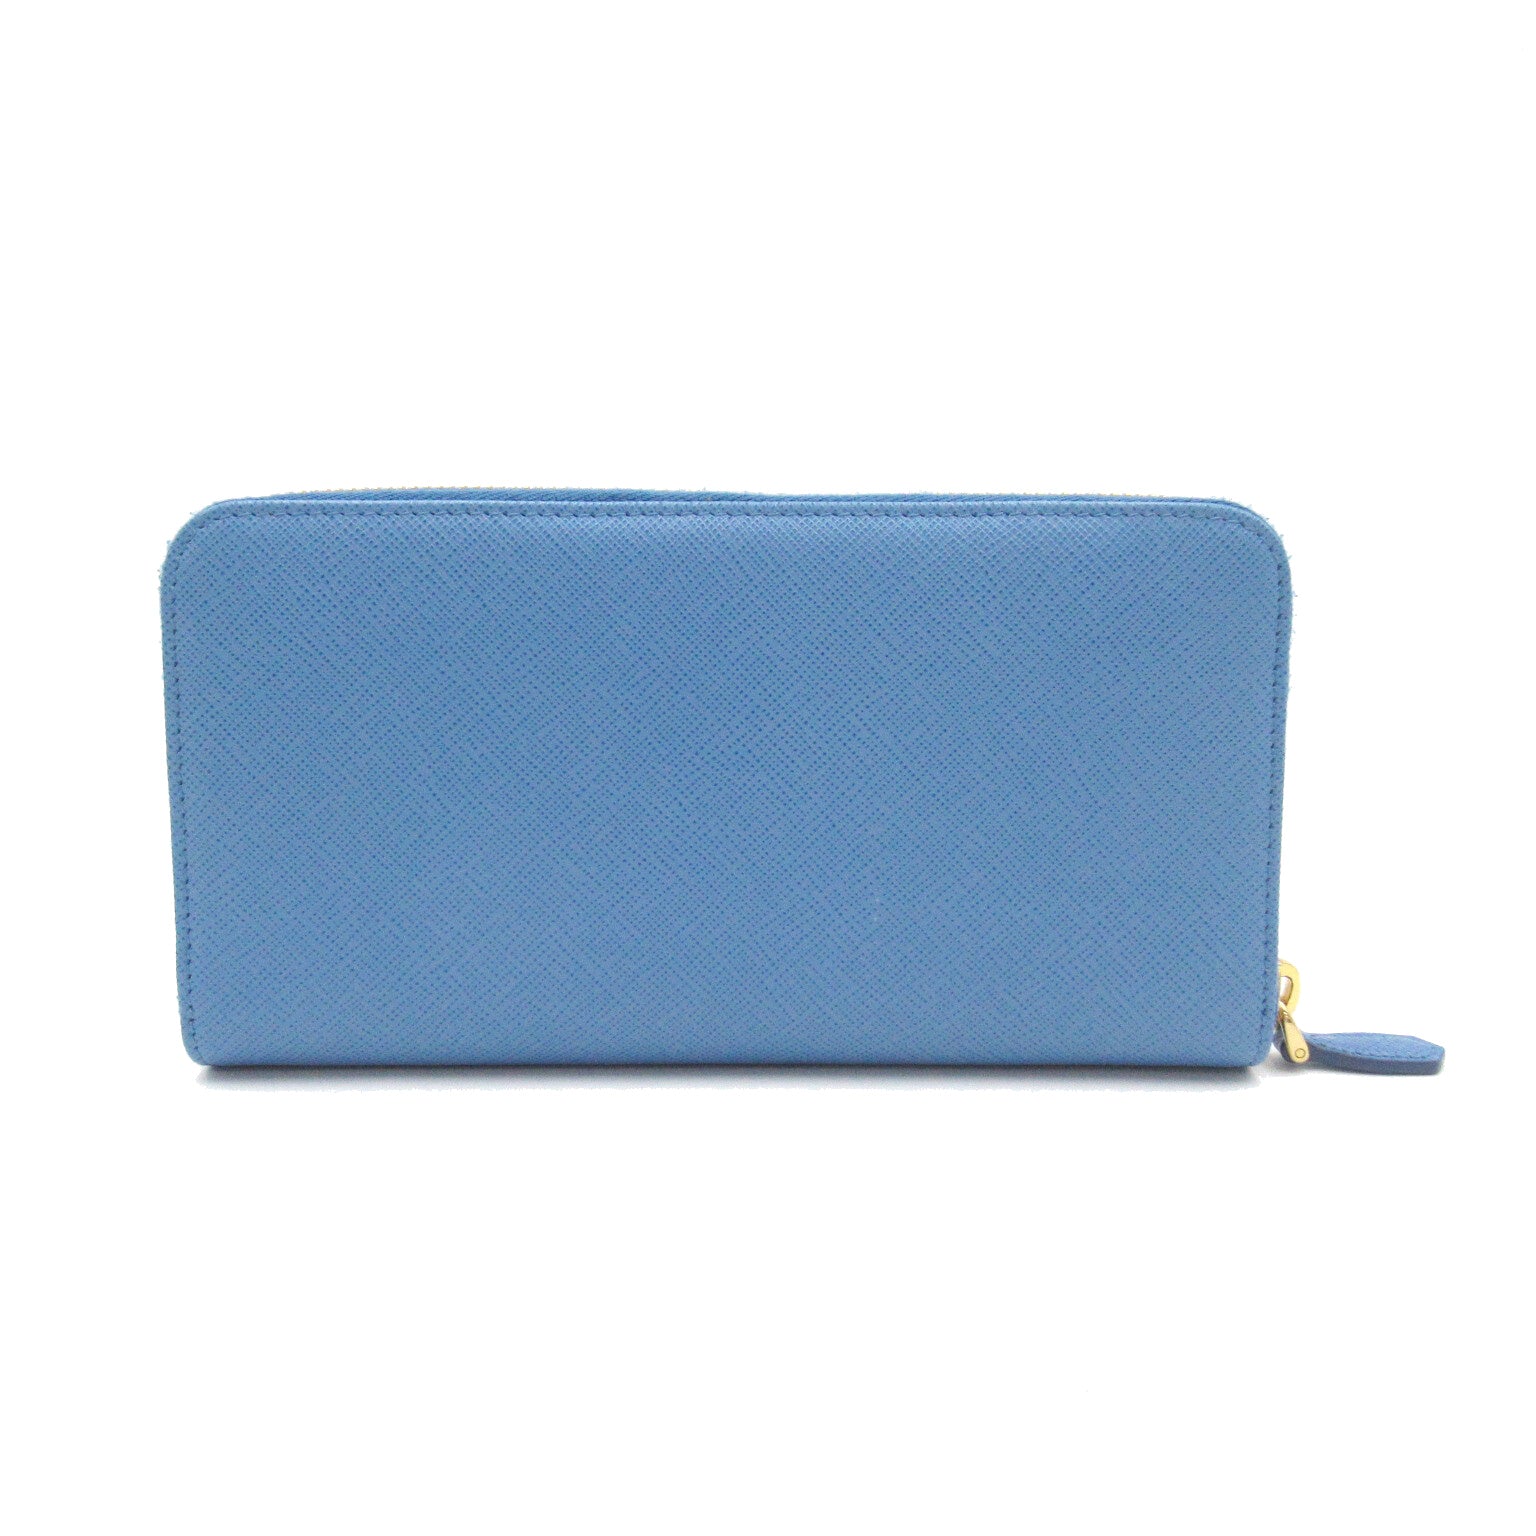 Prada Prada Round Long Wallet Round Long Wallet Sapphire Leather   Blue 1ML506